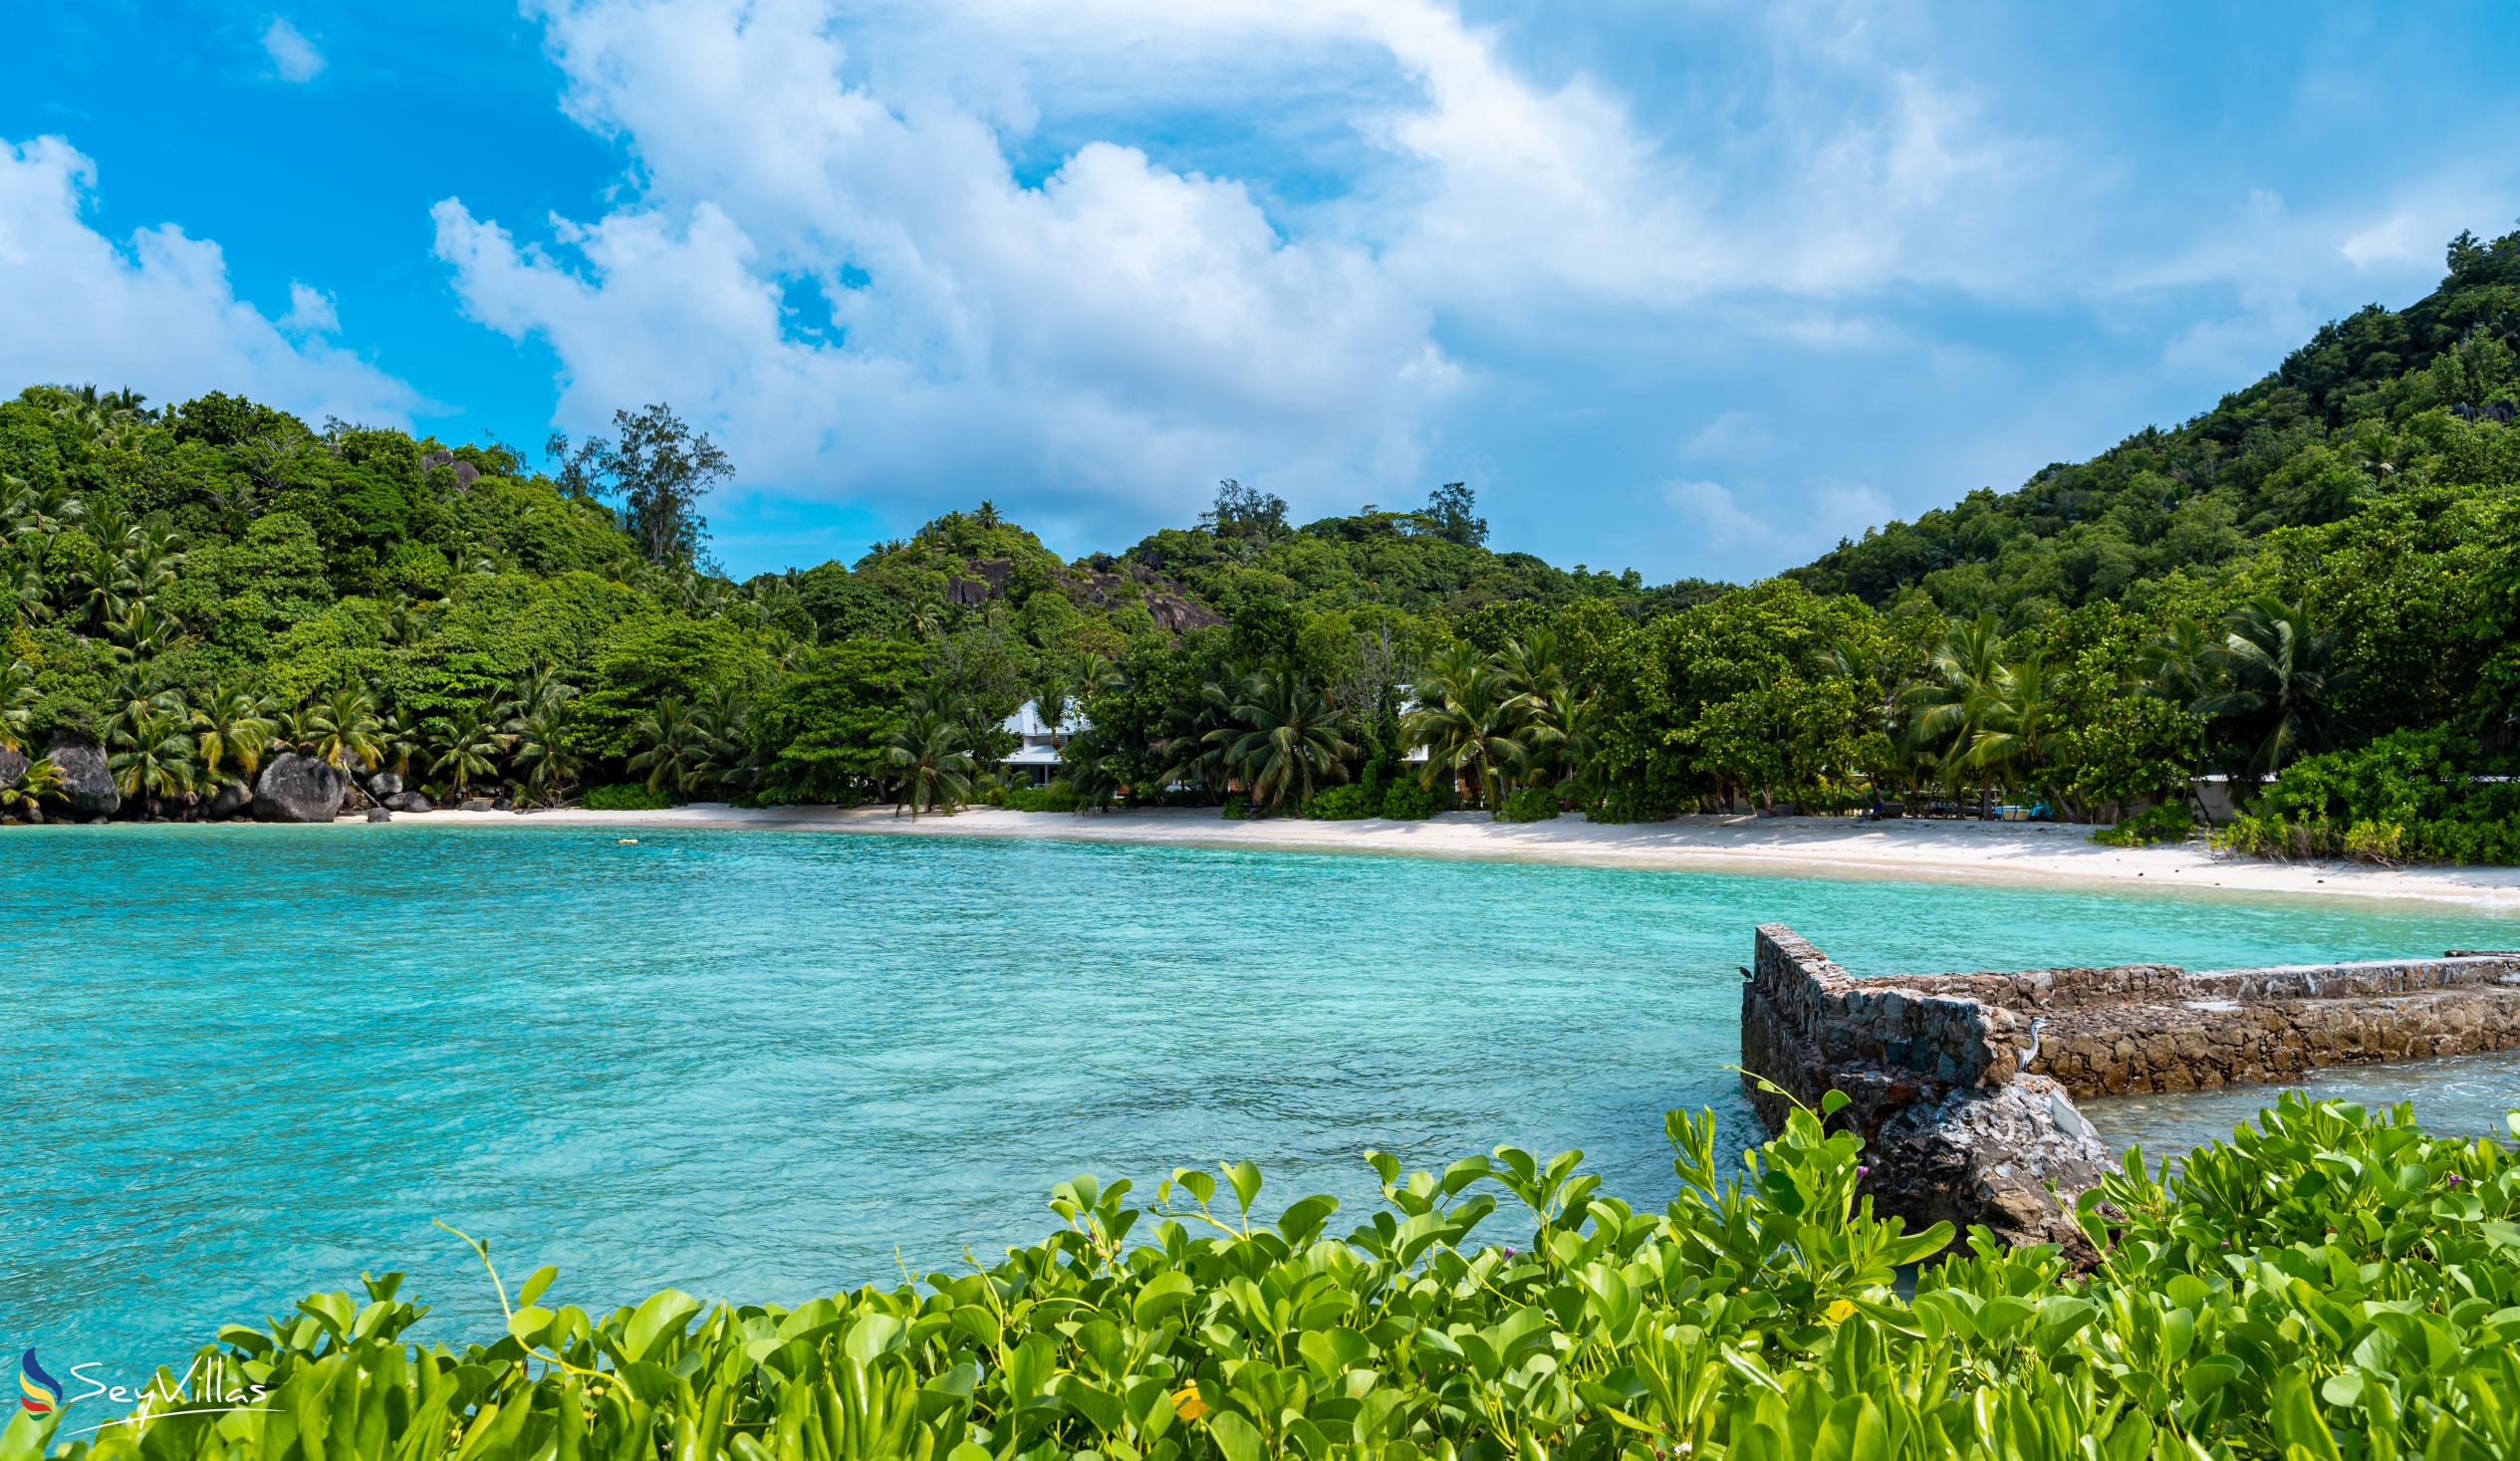 Photo 125: La Belle Tortue - Location - Silhouette Island (Seychelles)